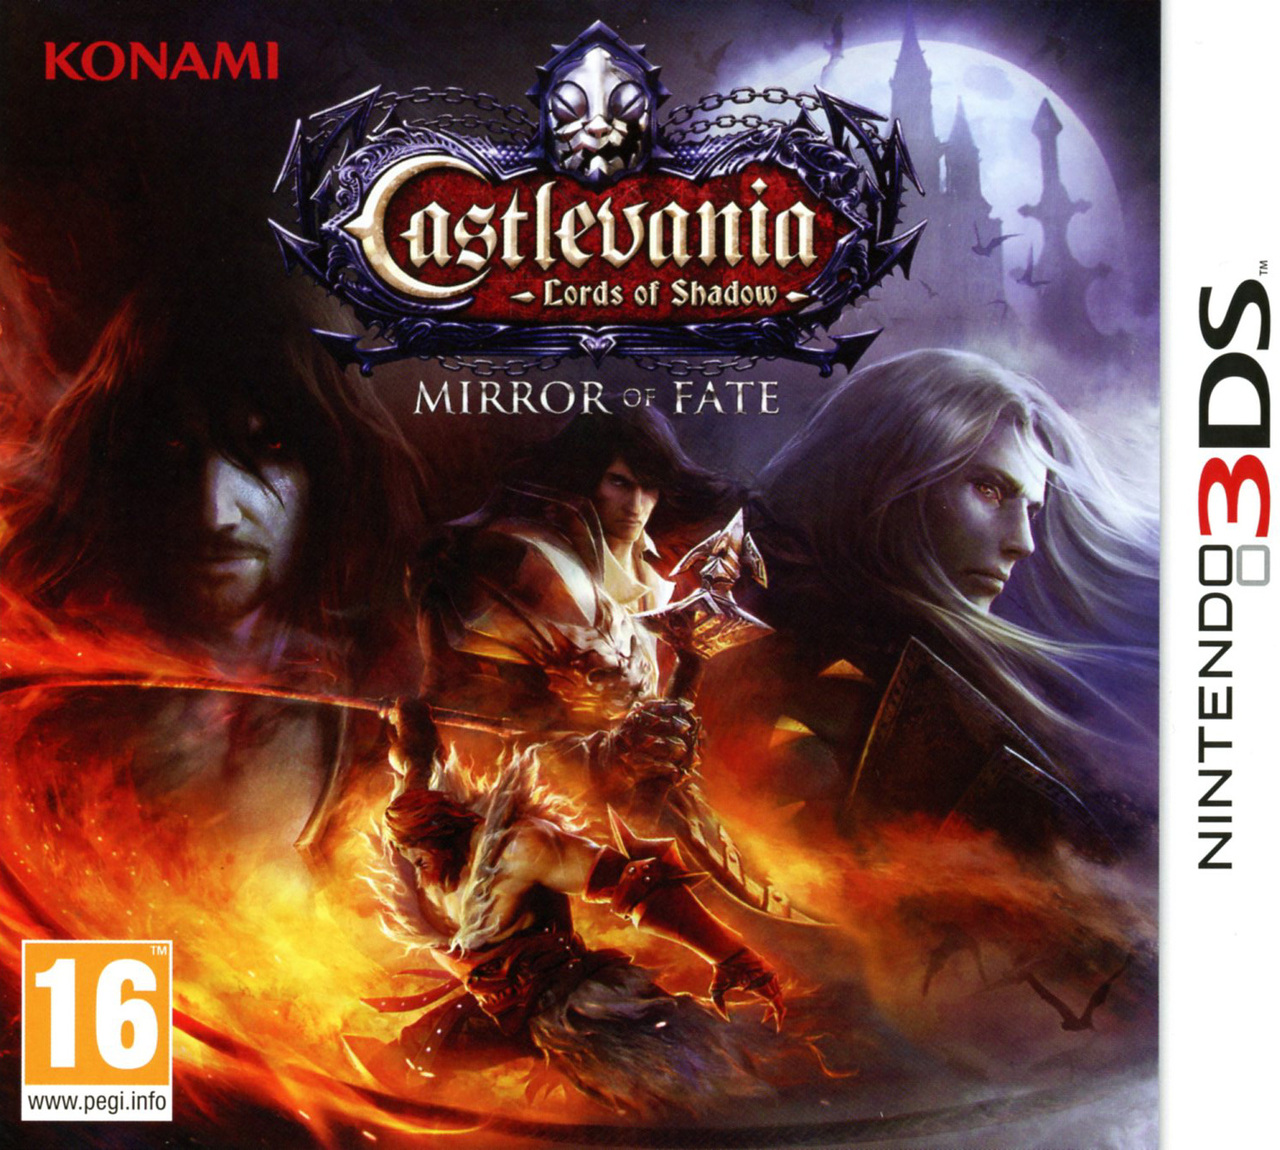 jaquette du jeu vidéo Castlevania : Lords of Shadow - Mirror of Fate